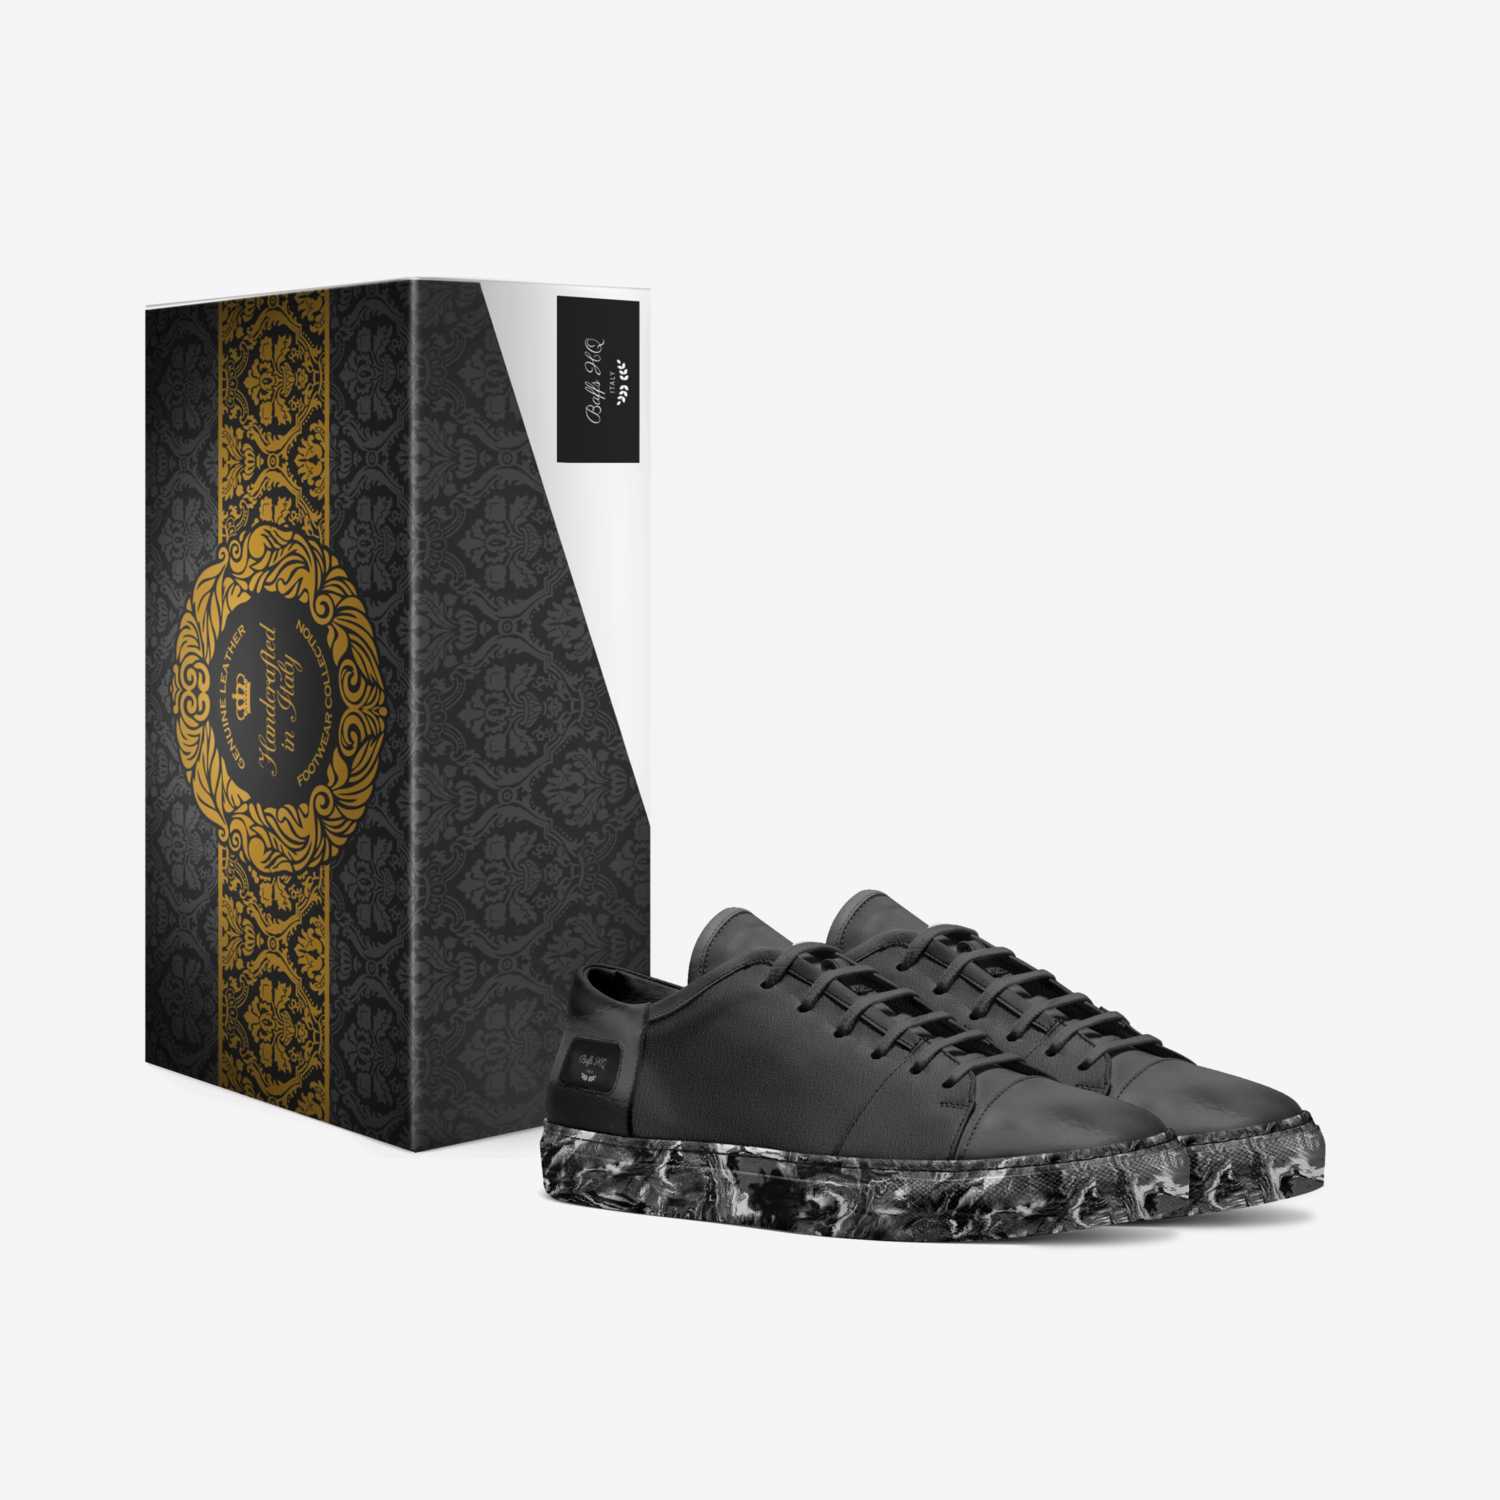 Baffs HQ custom made in Italy shoes by Luca Onyebueke | Box view